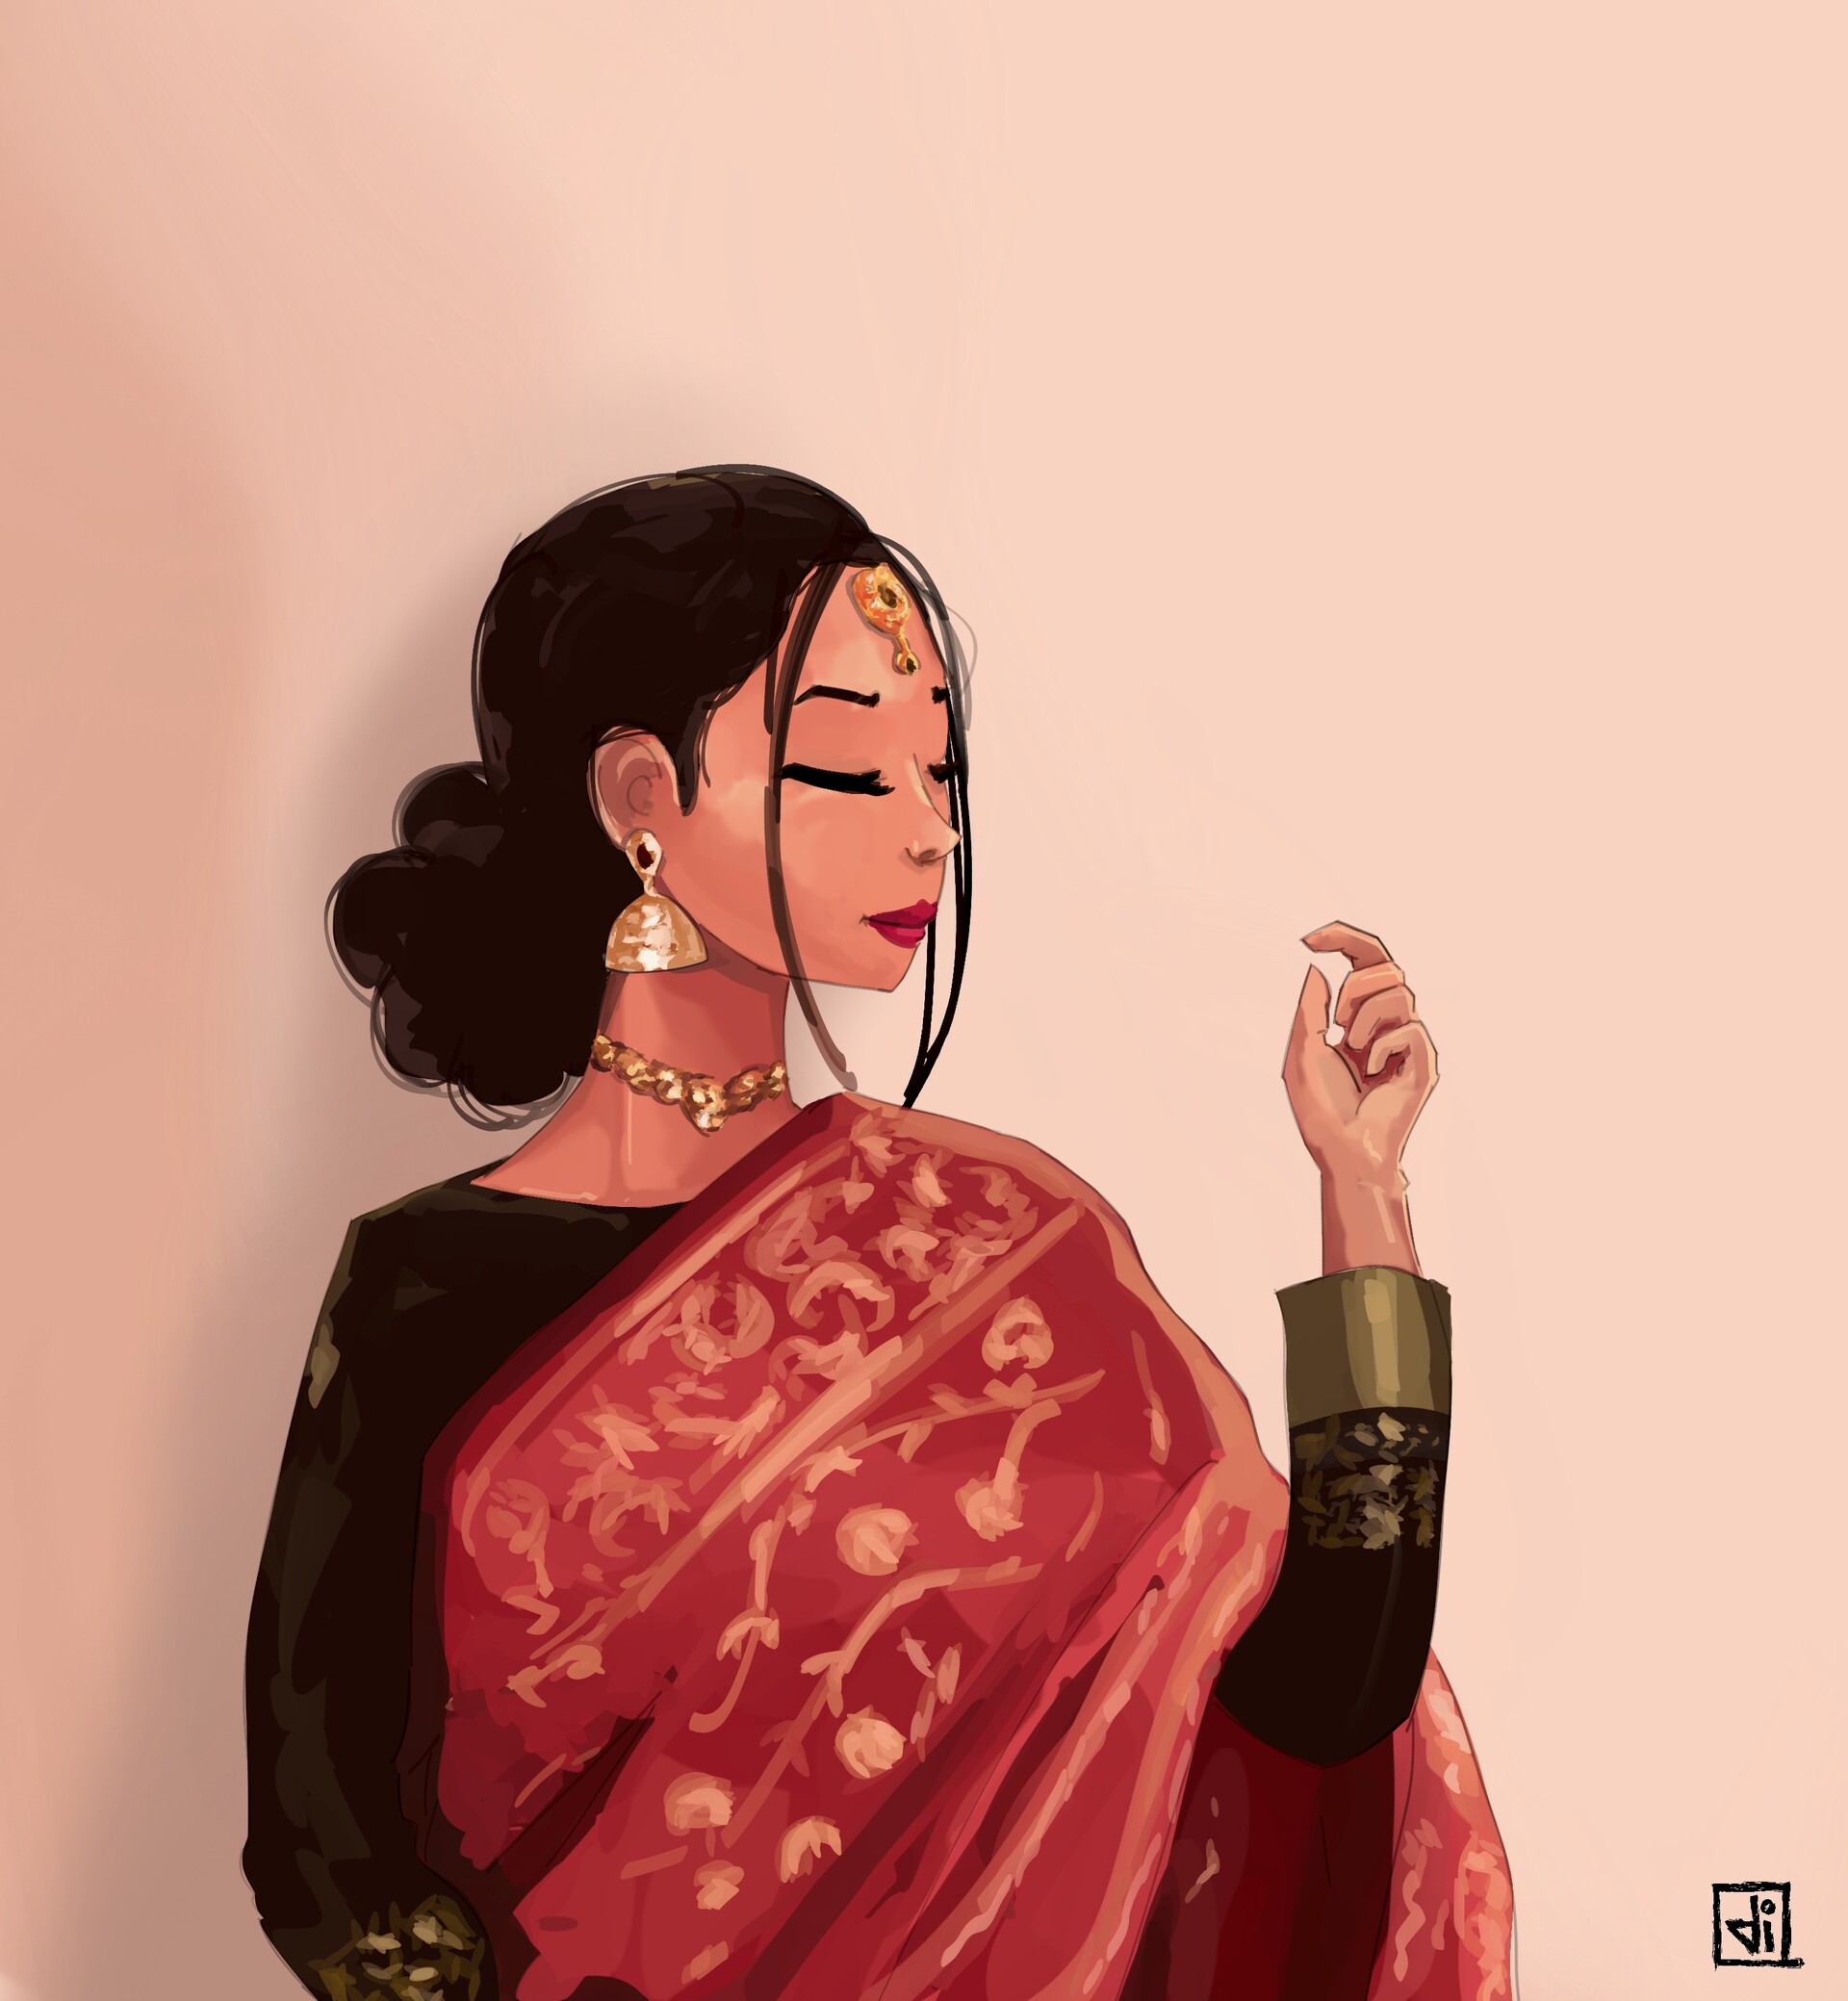 Bengal beauty by Yogita Chawdhary on Dribbble